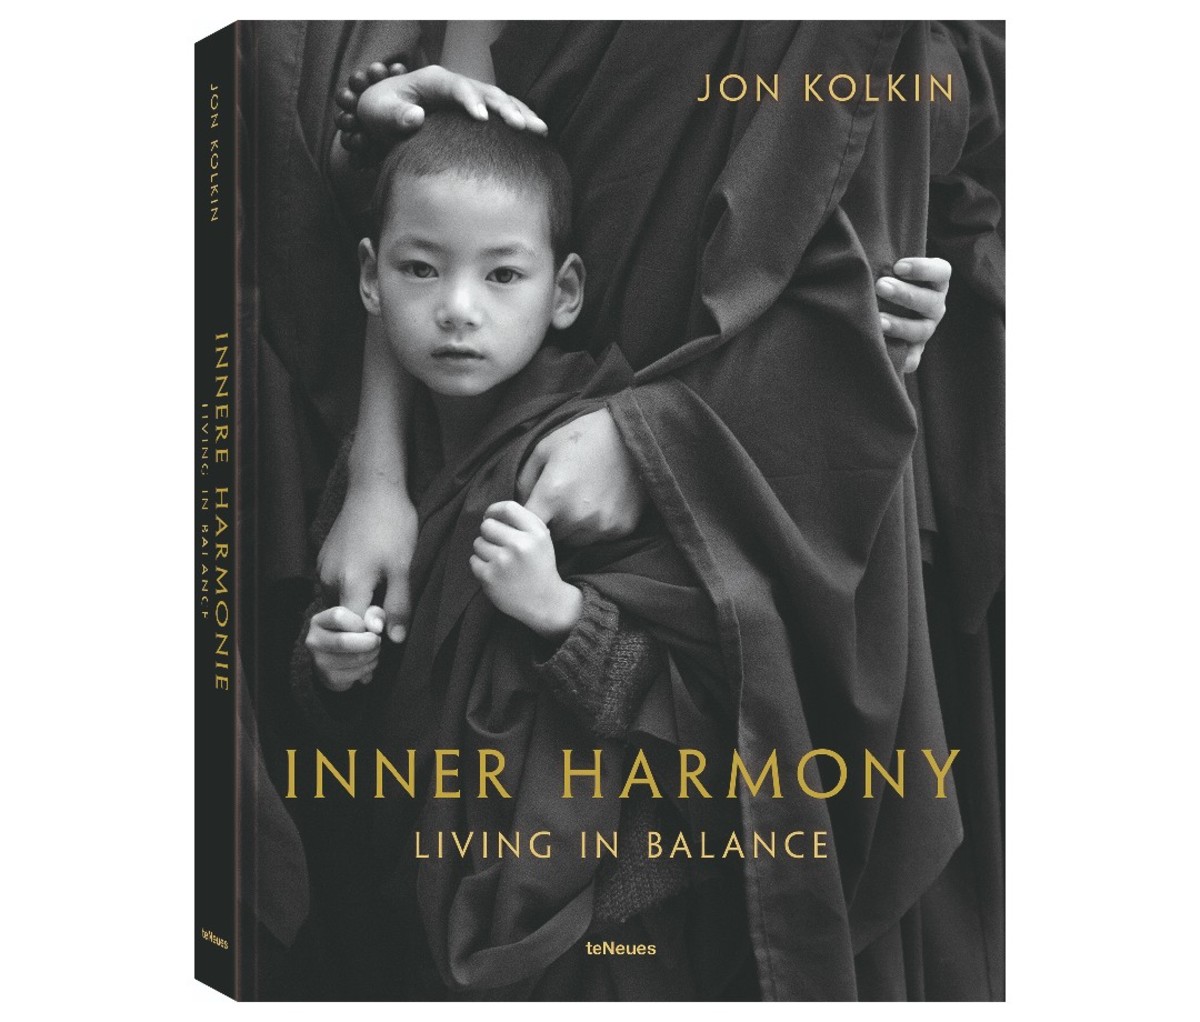 Inner Harmony: Living in Balance by Jon Kolkin